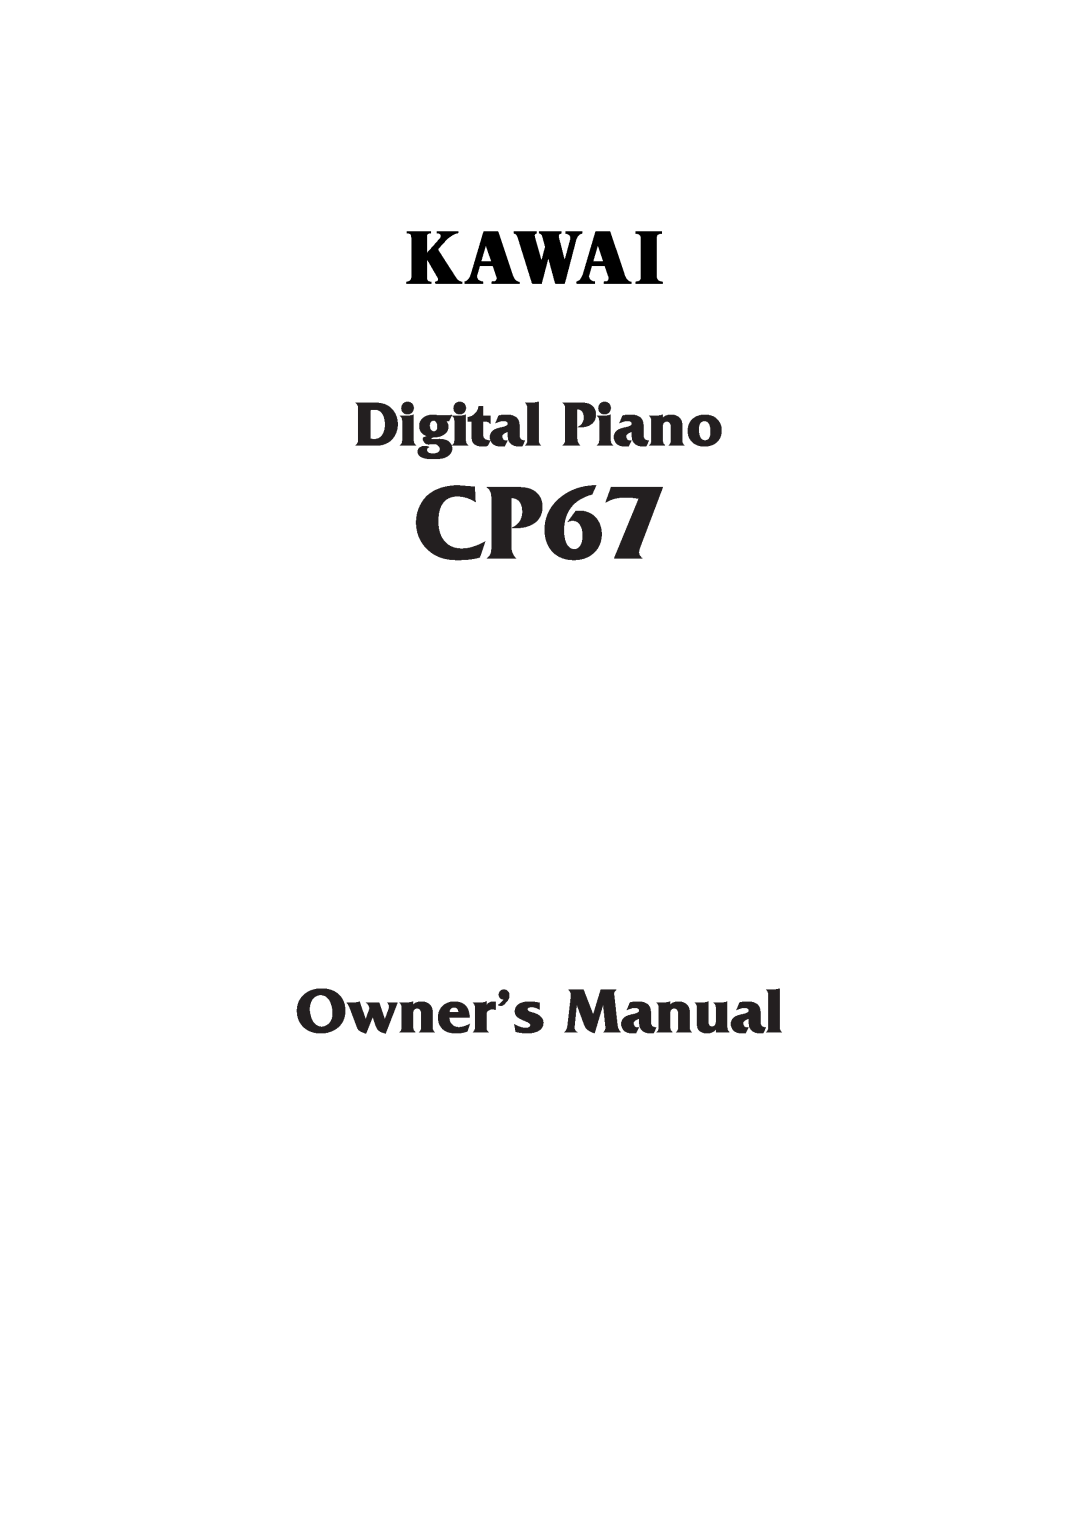 Kawai CP67 manual Digital Piano, Owner’s Manual 